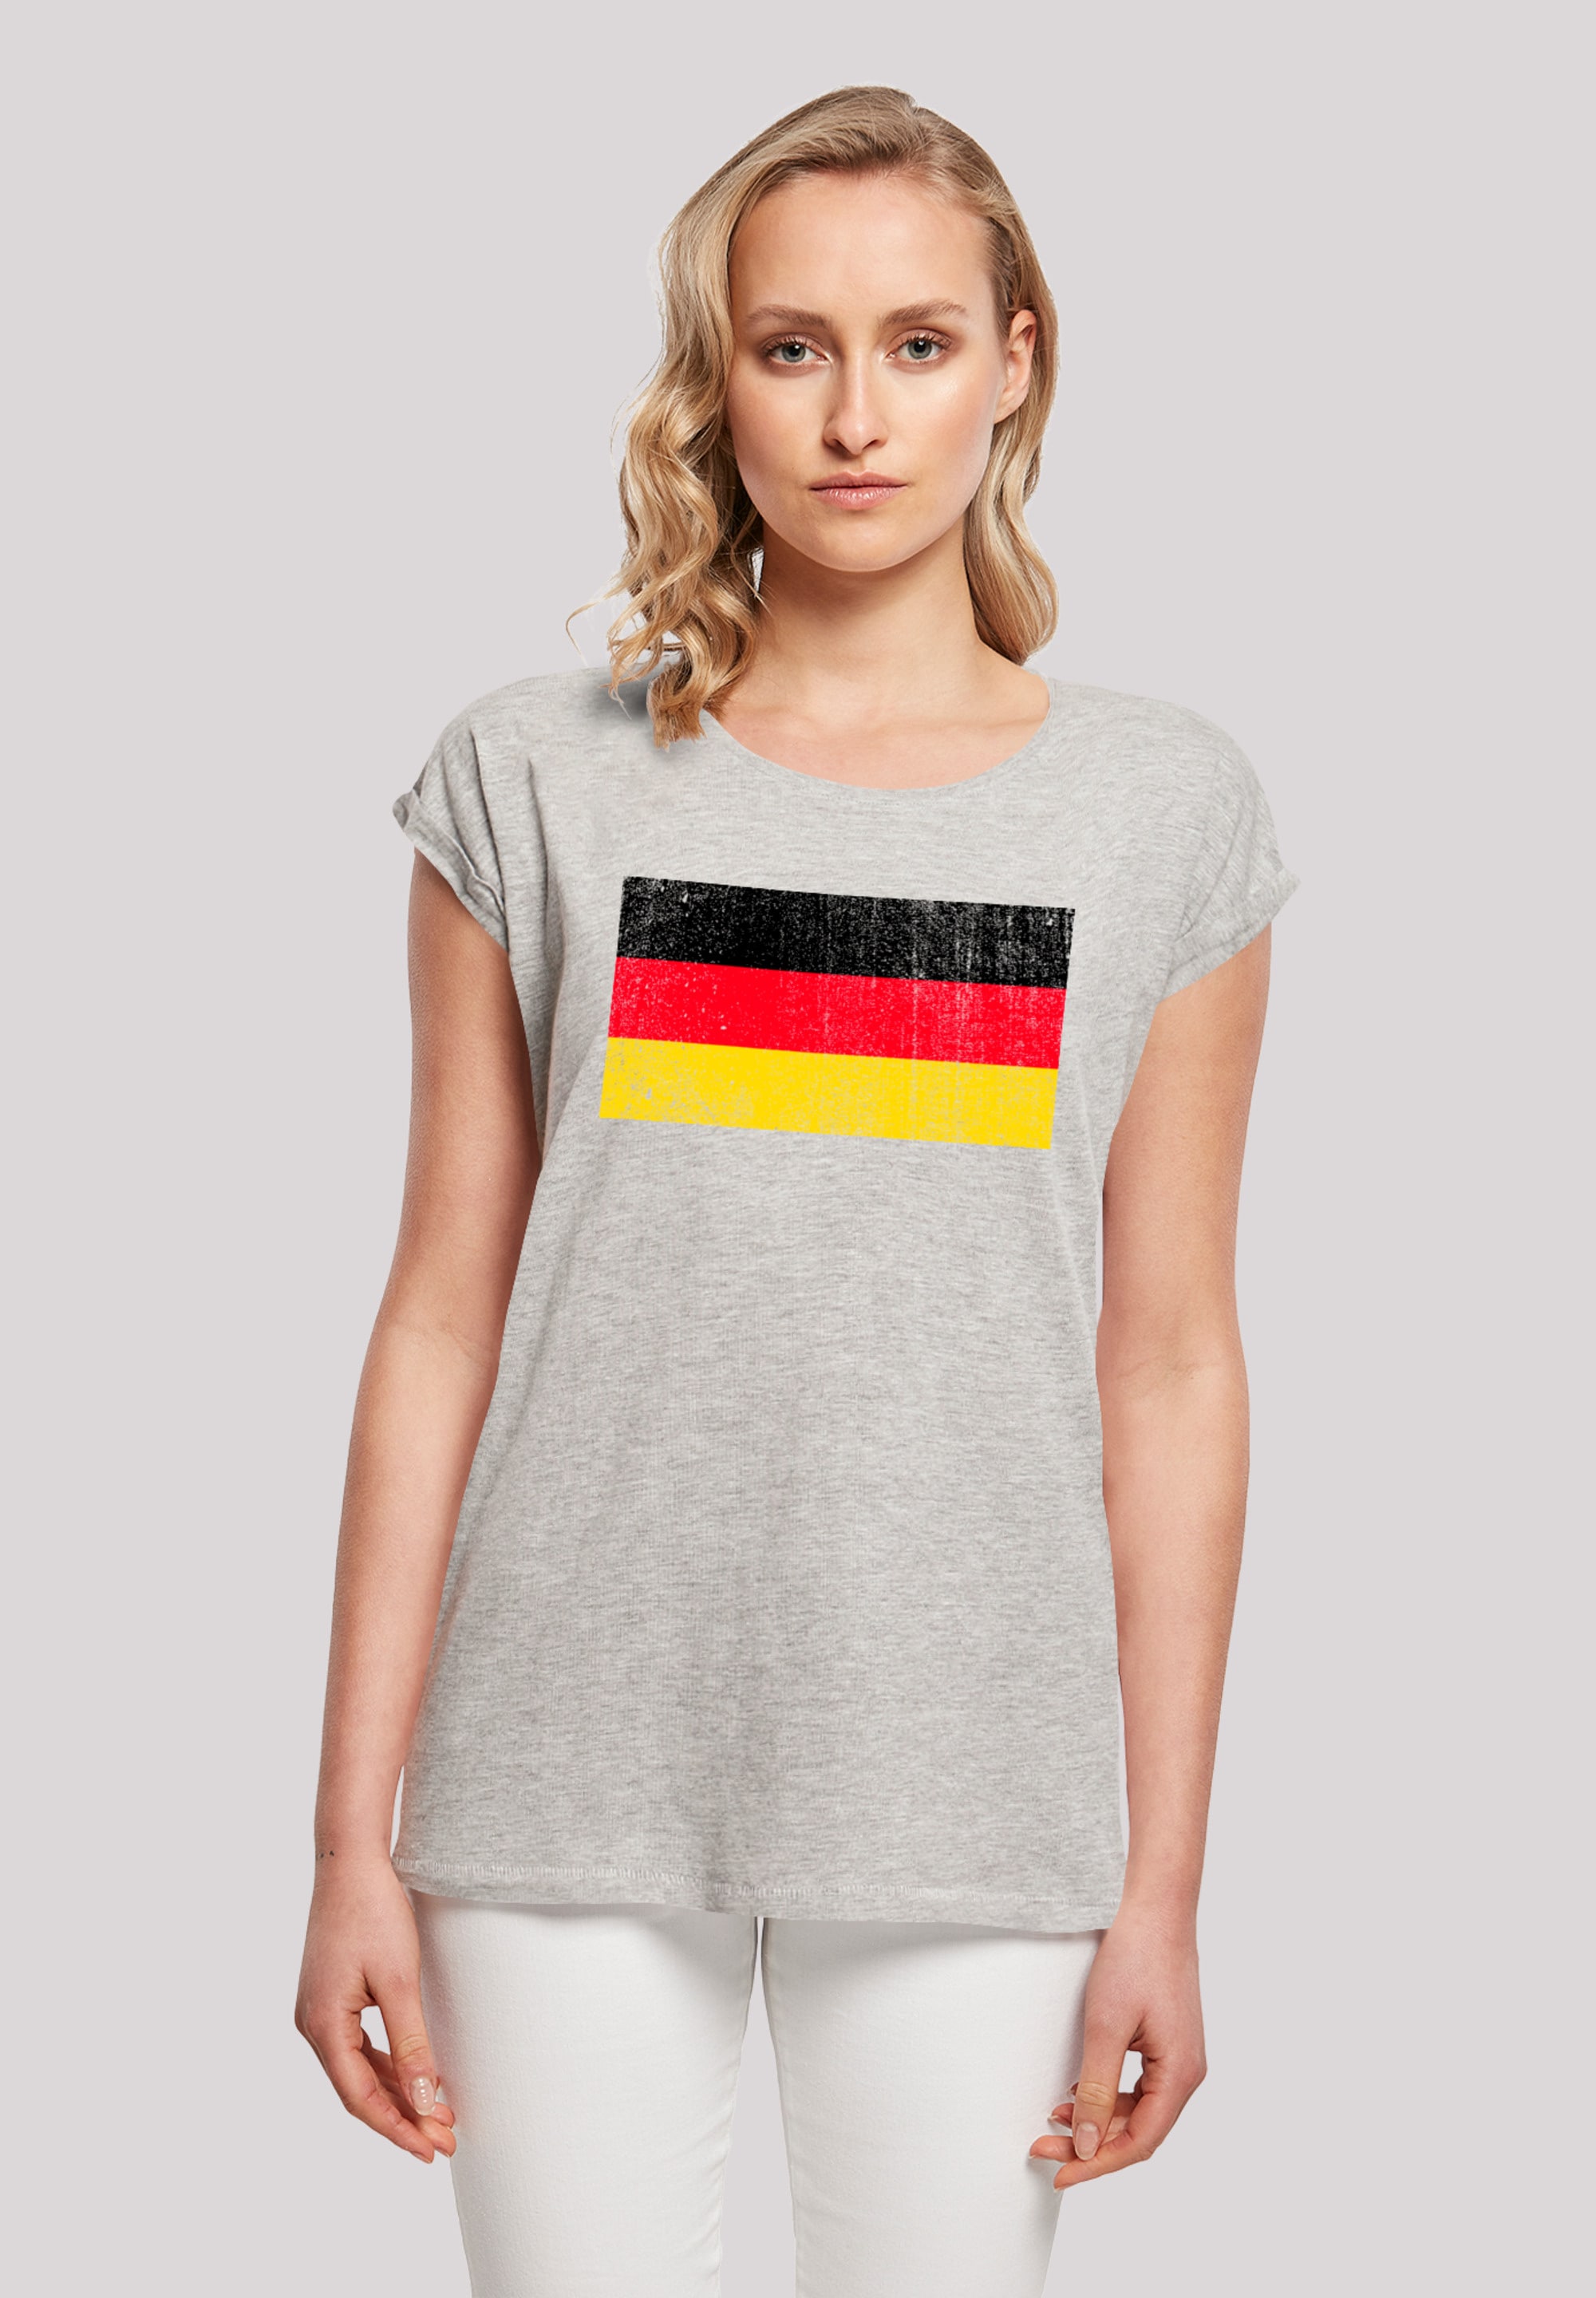 Print T-Shirt »Germany kaufen distressed«, F4NT4STIC Flagge Deutschland